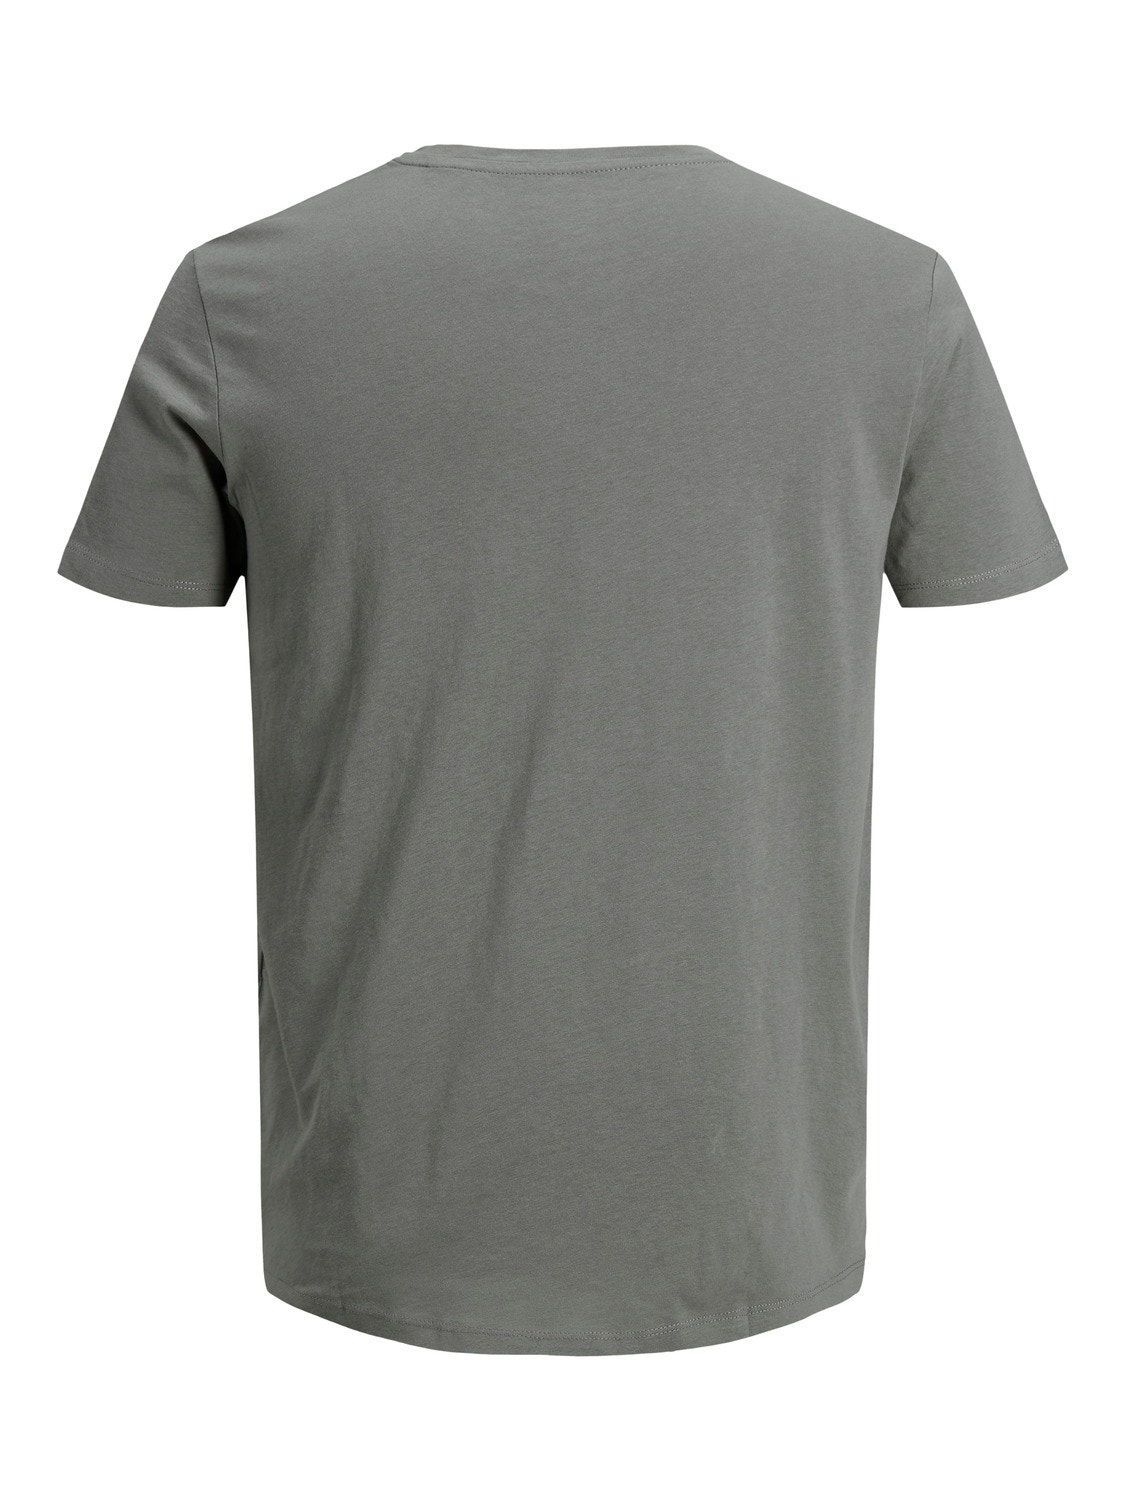 Jack & Jones Plain O-Neck T-shirt -Sedona Sage - 12113648